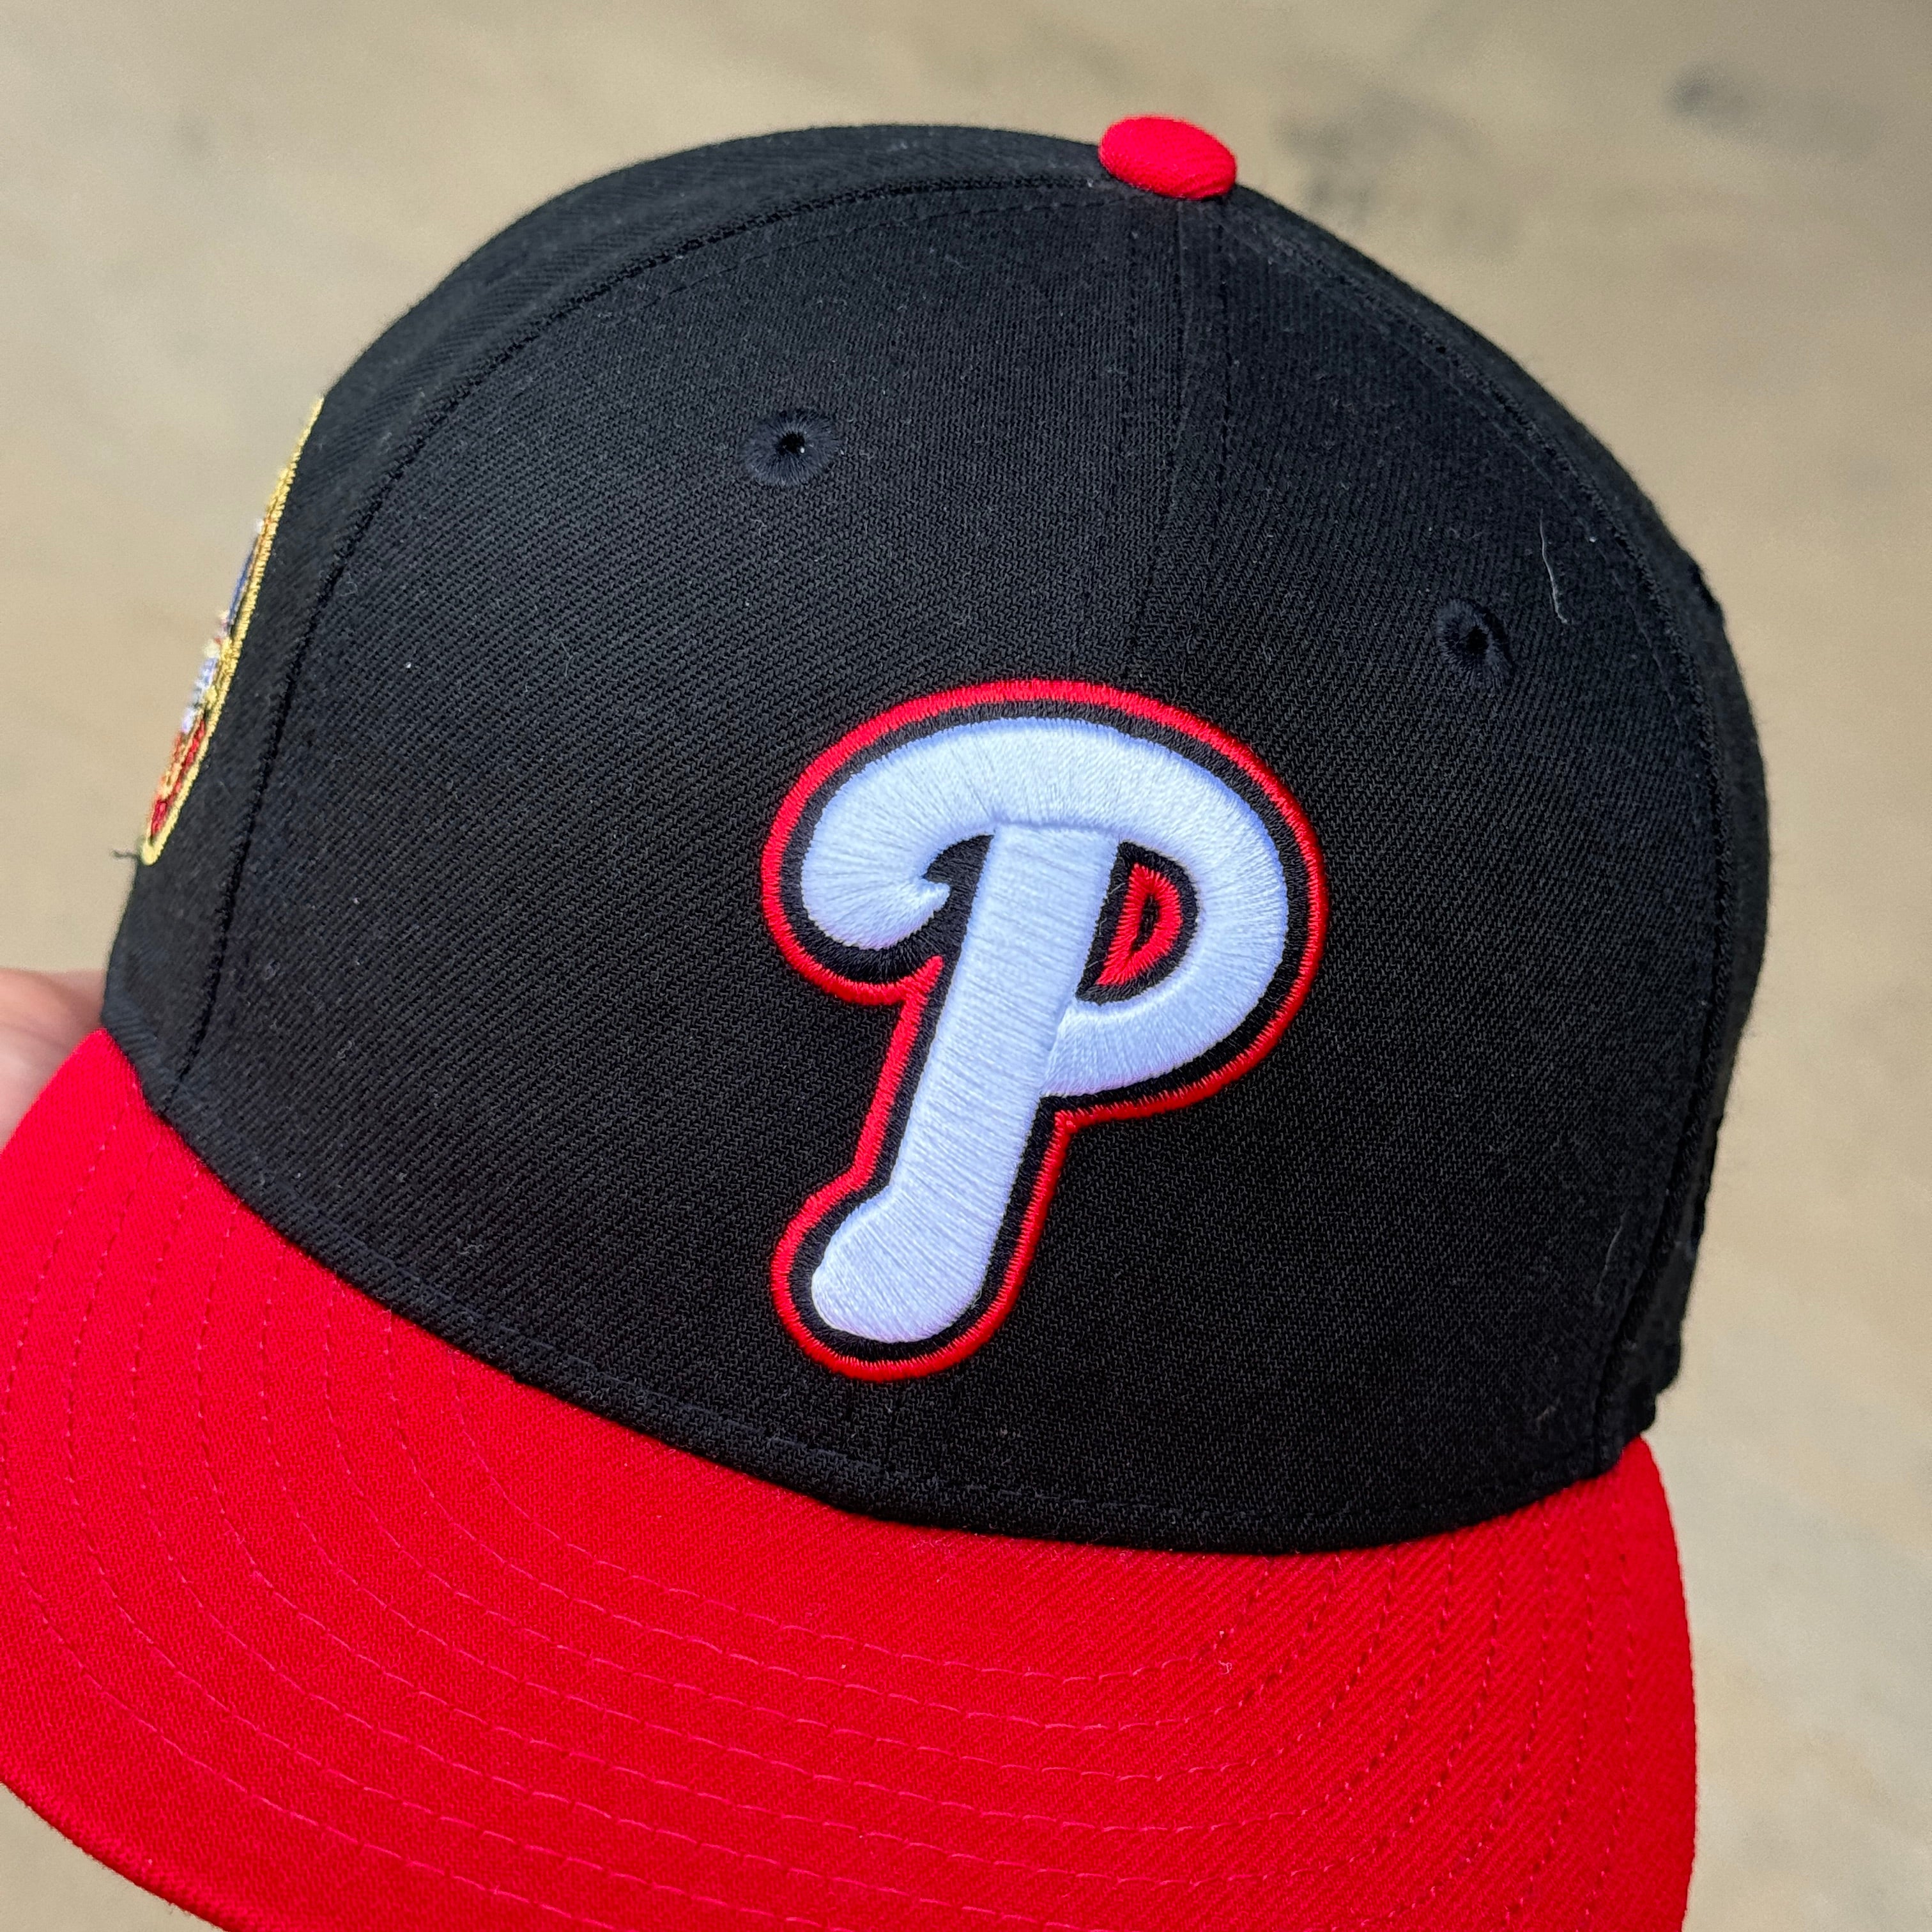 USED 1/8 Black Philadelphia Phillies Veterans Stadium 59fifty New Era Fitted Hat Cap